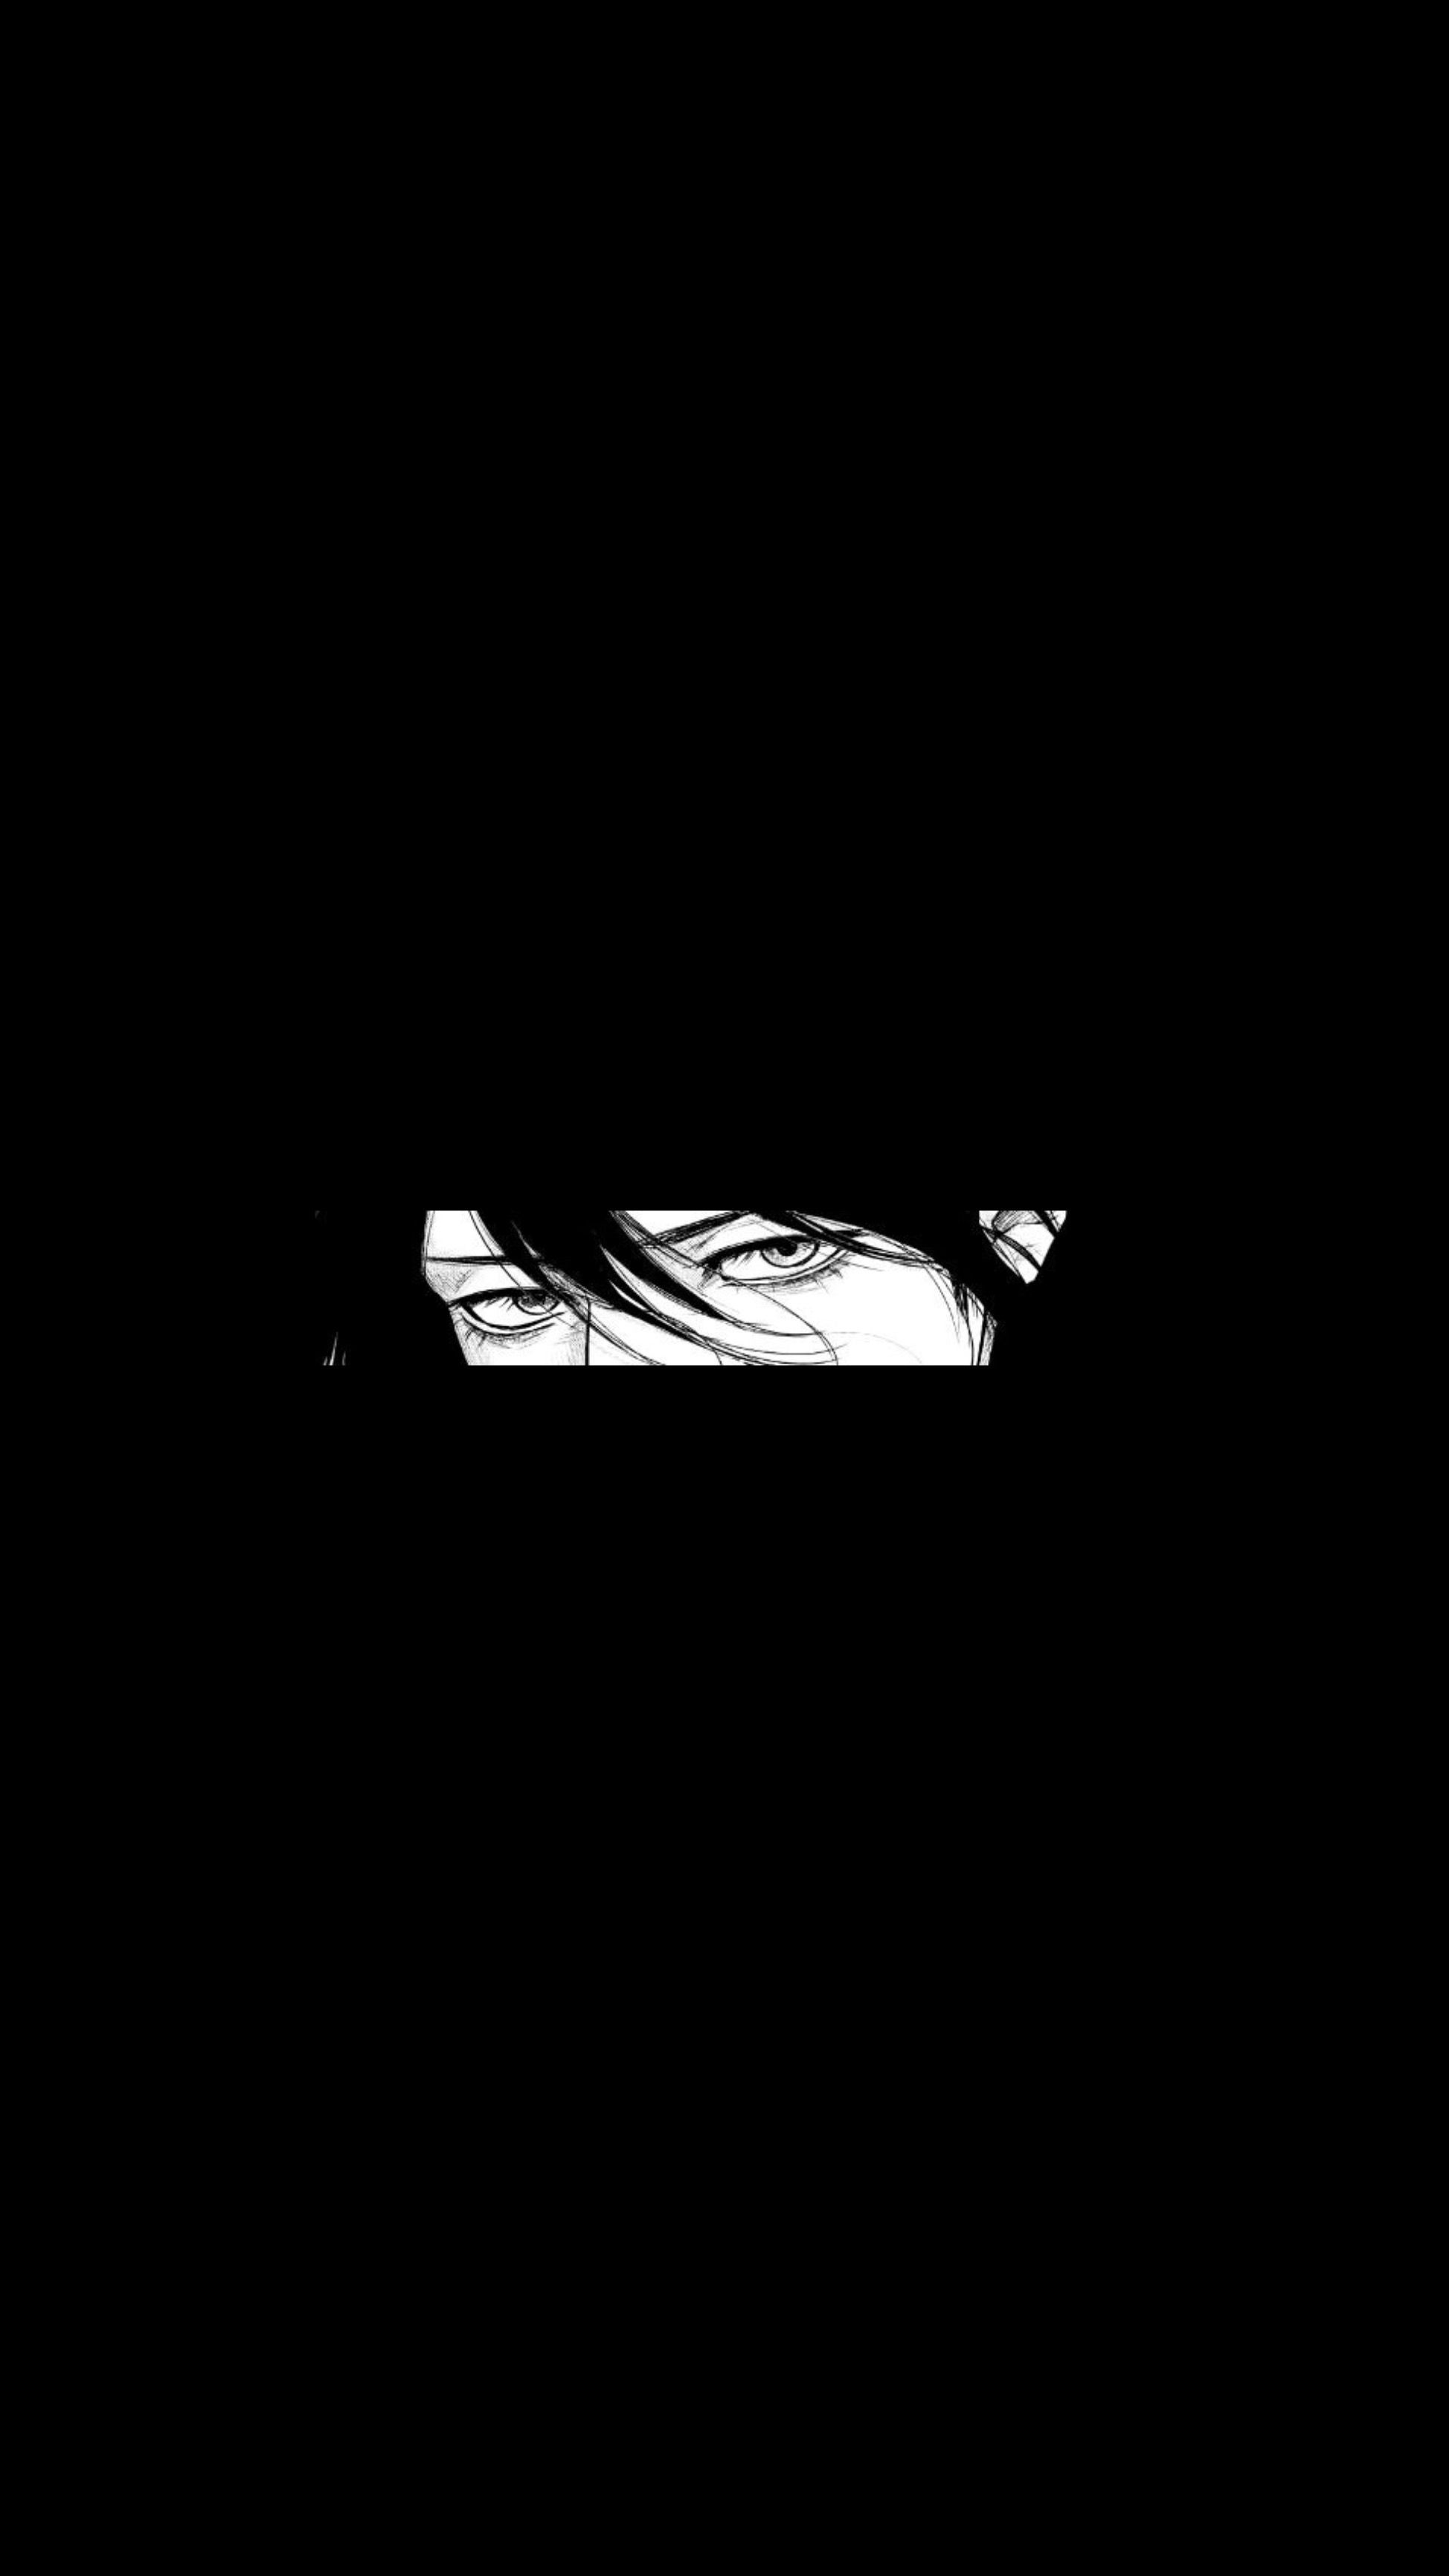 Anime eyes black and white lockscreen. Black wallpaper iphone dark, Anime wallpaper iphone, Anime eyes